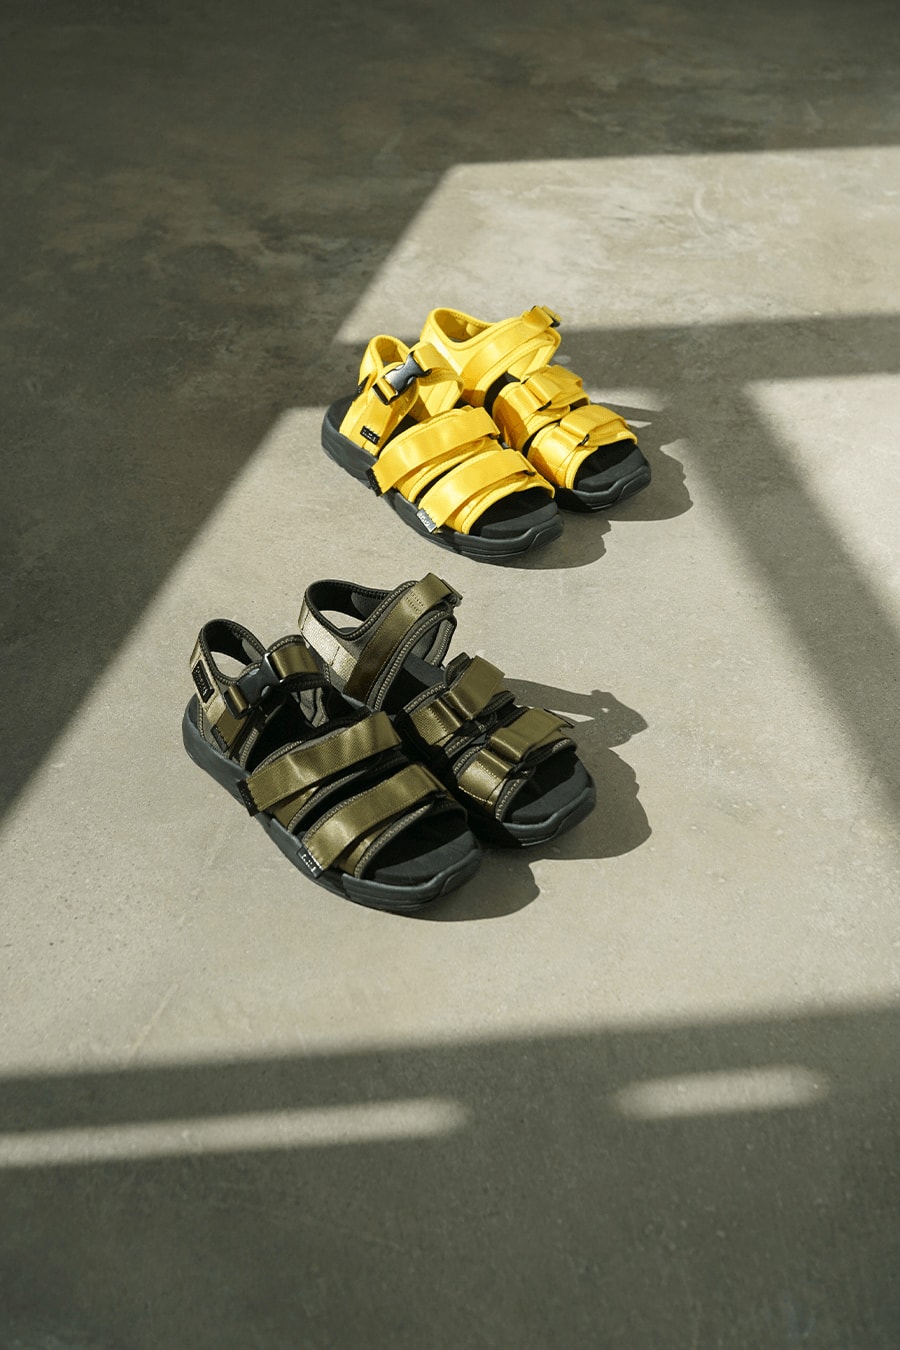 Tom Wood x Suicoke Vega Sandal Makö Clog Collaboration Custom Shoe New Release Information Olive Green Sunshine Yellow Black Green Leather Suede